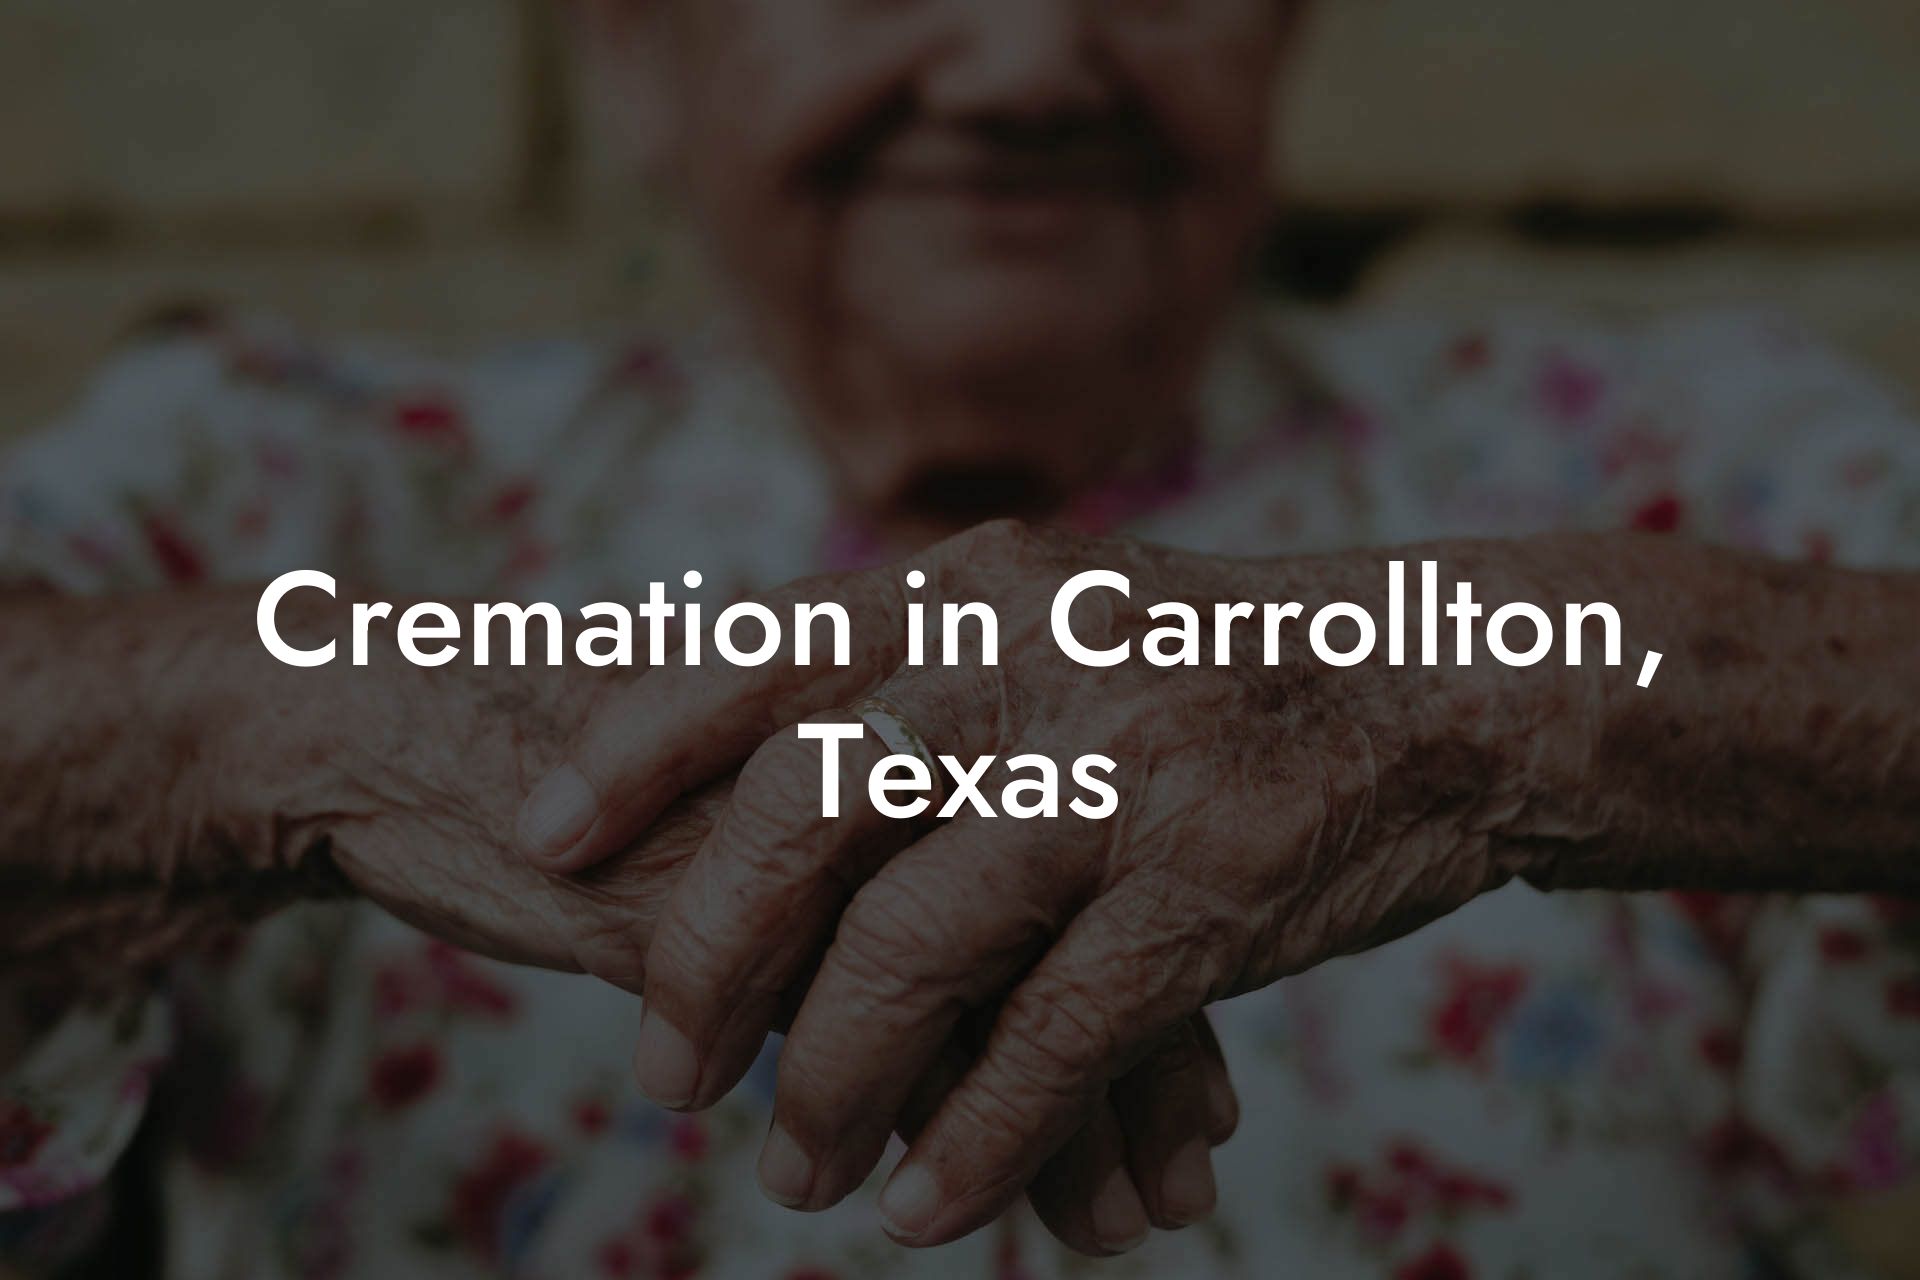 Cremation in Carrollton, Texas